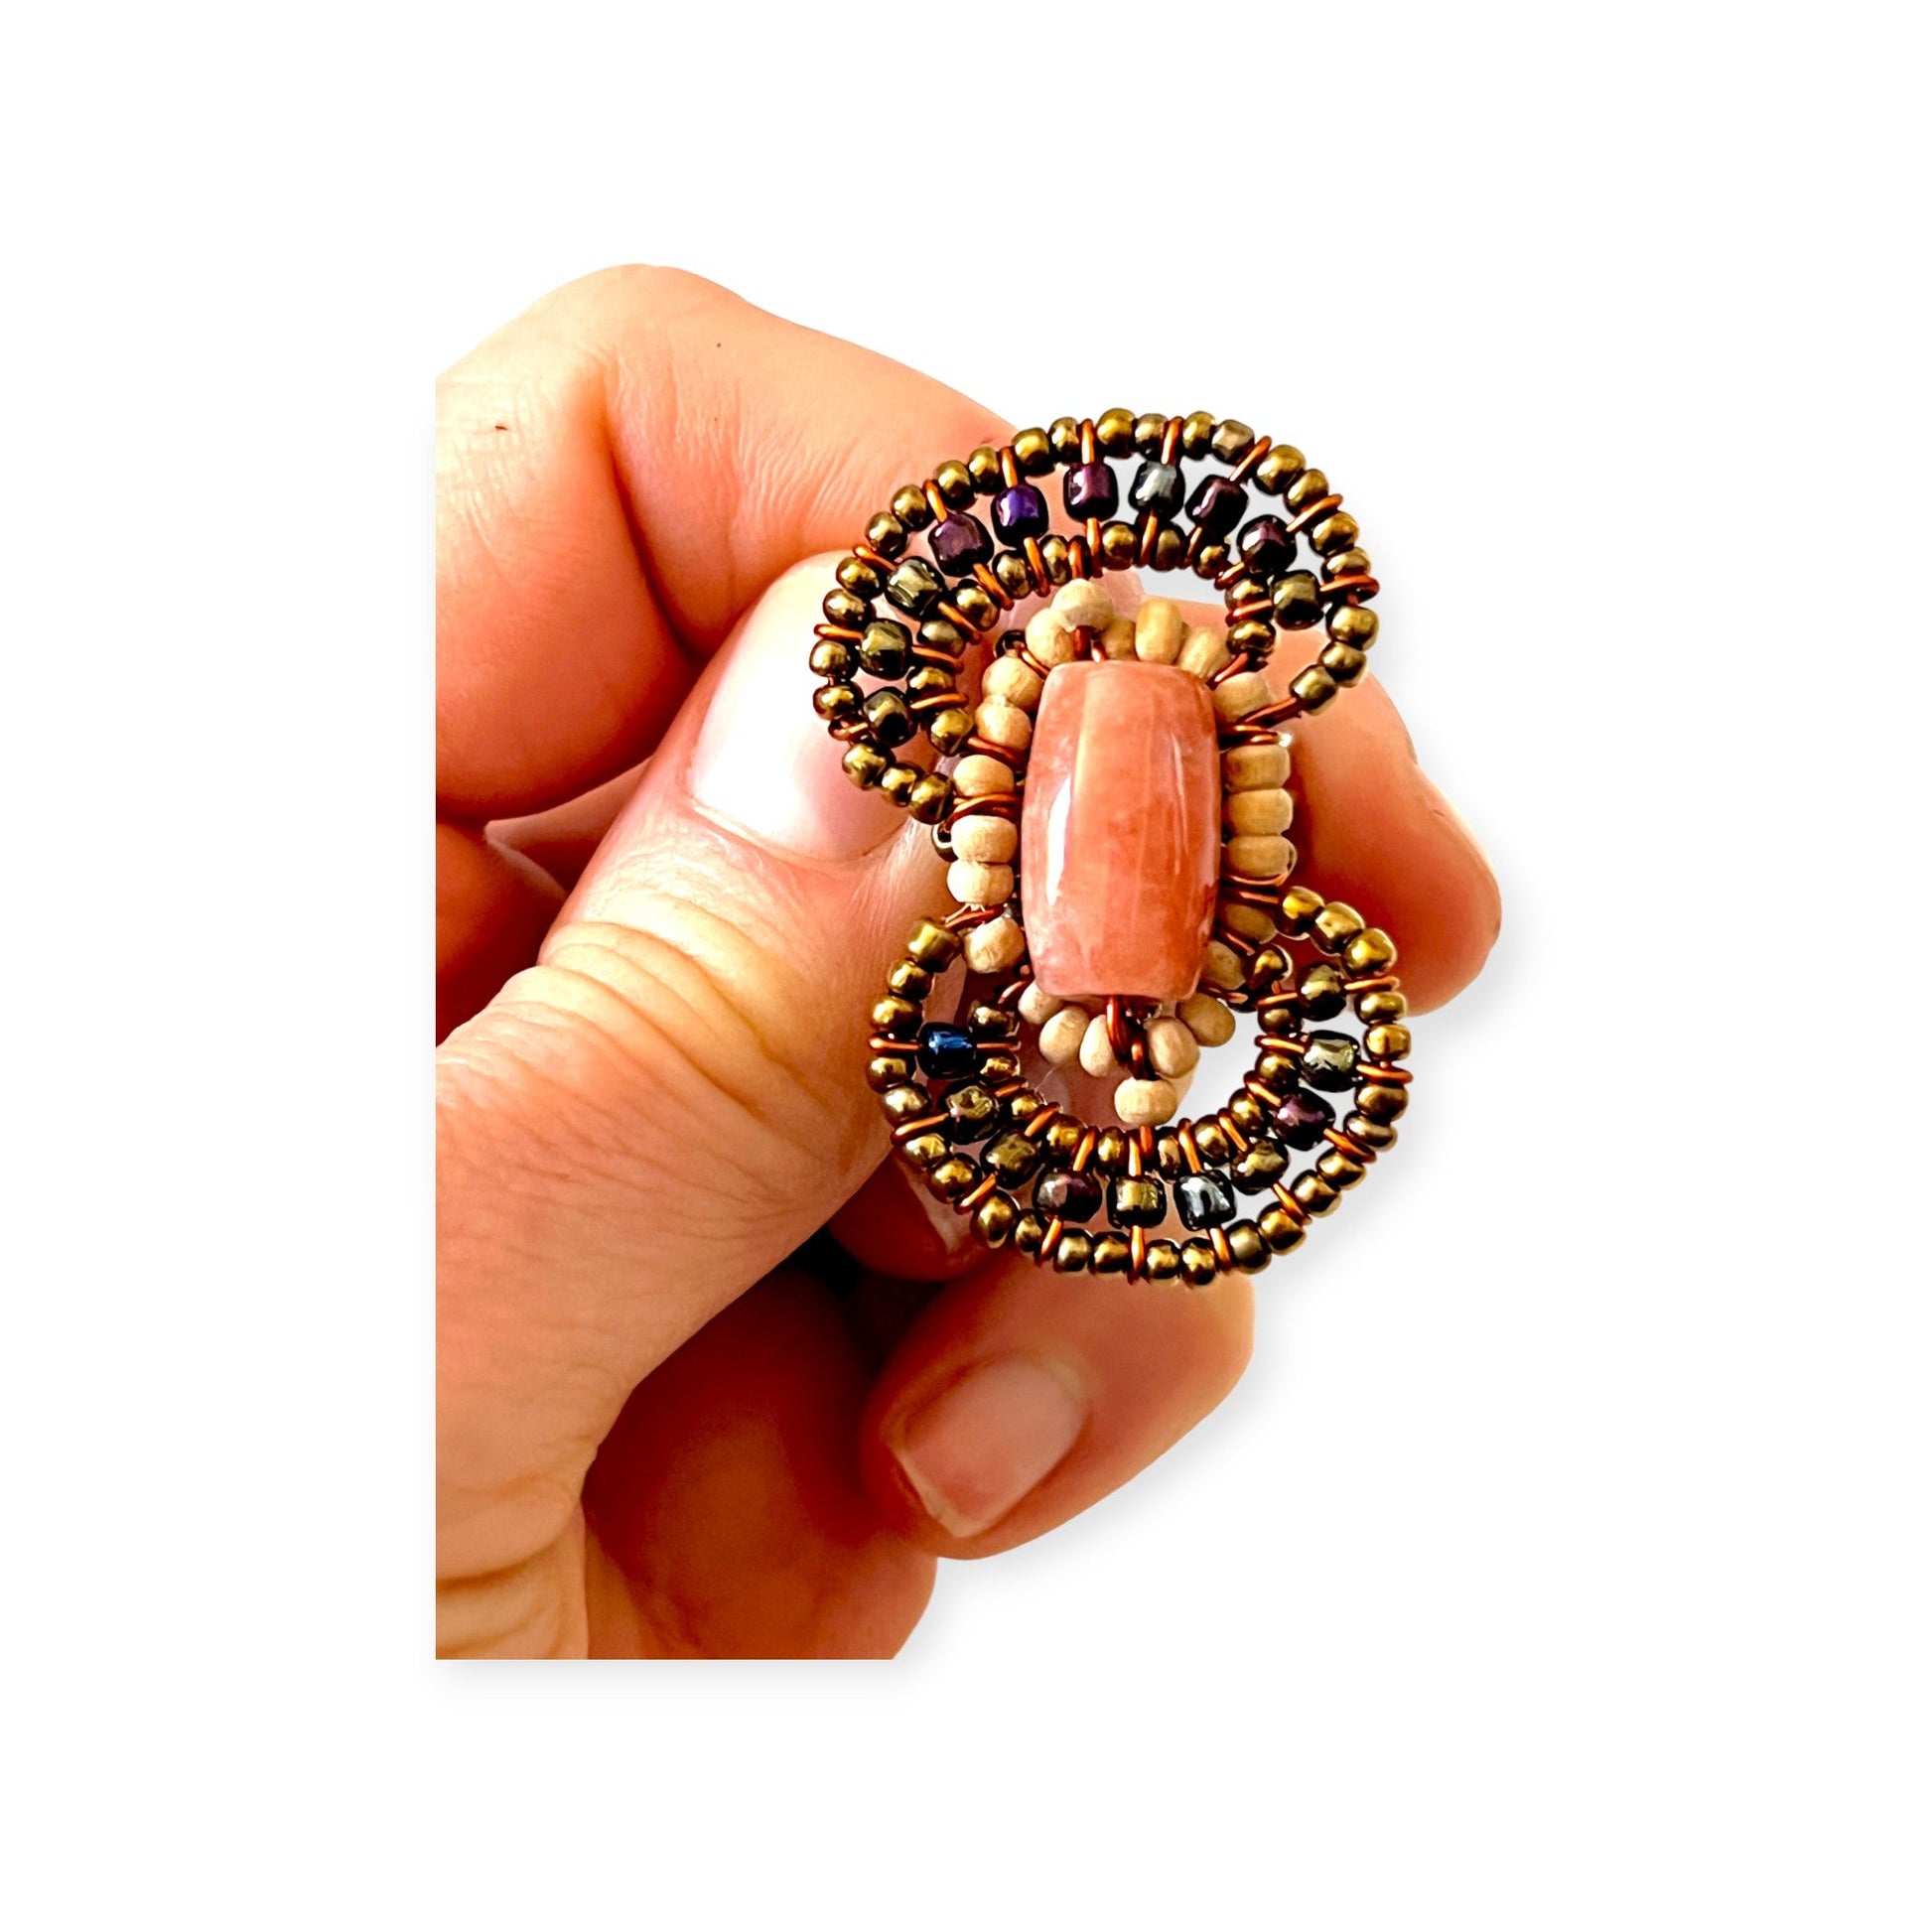 Gemstone figure 8 ring in lovely earth tones colors - Sundara Joon